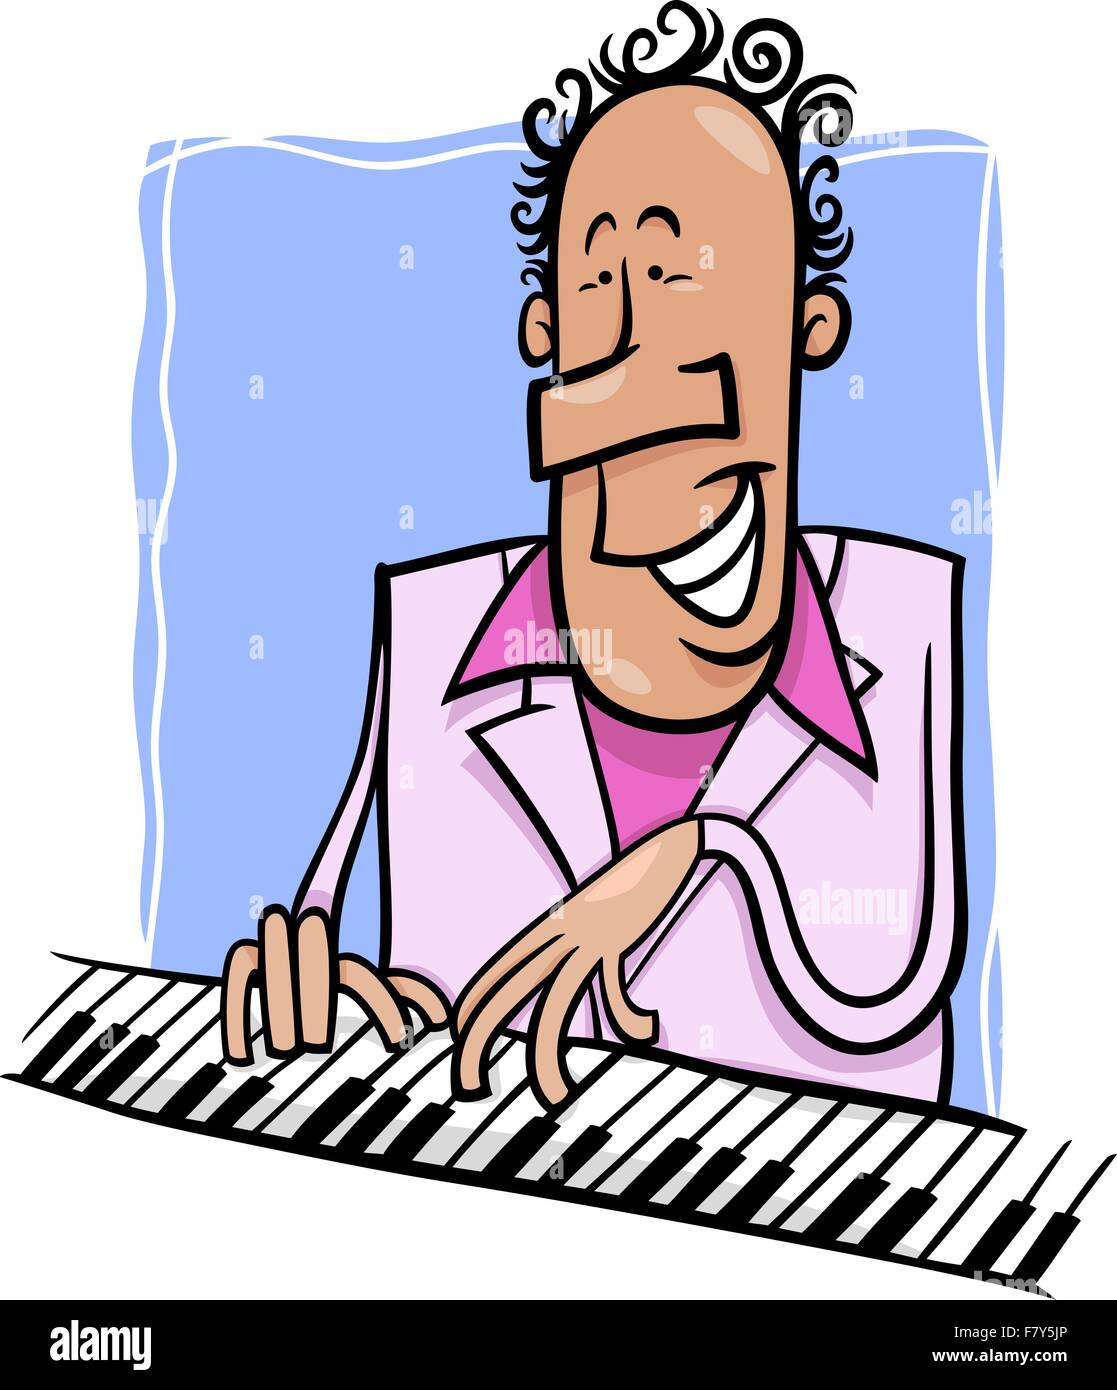 jazz pianist cartoon illustration Stock Vector